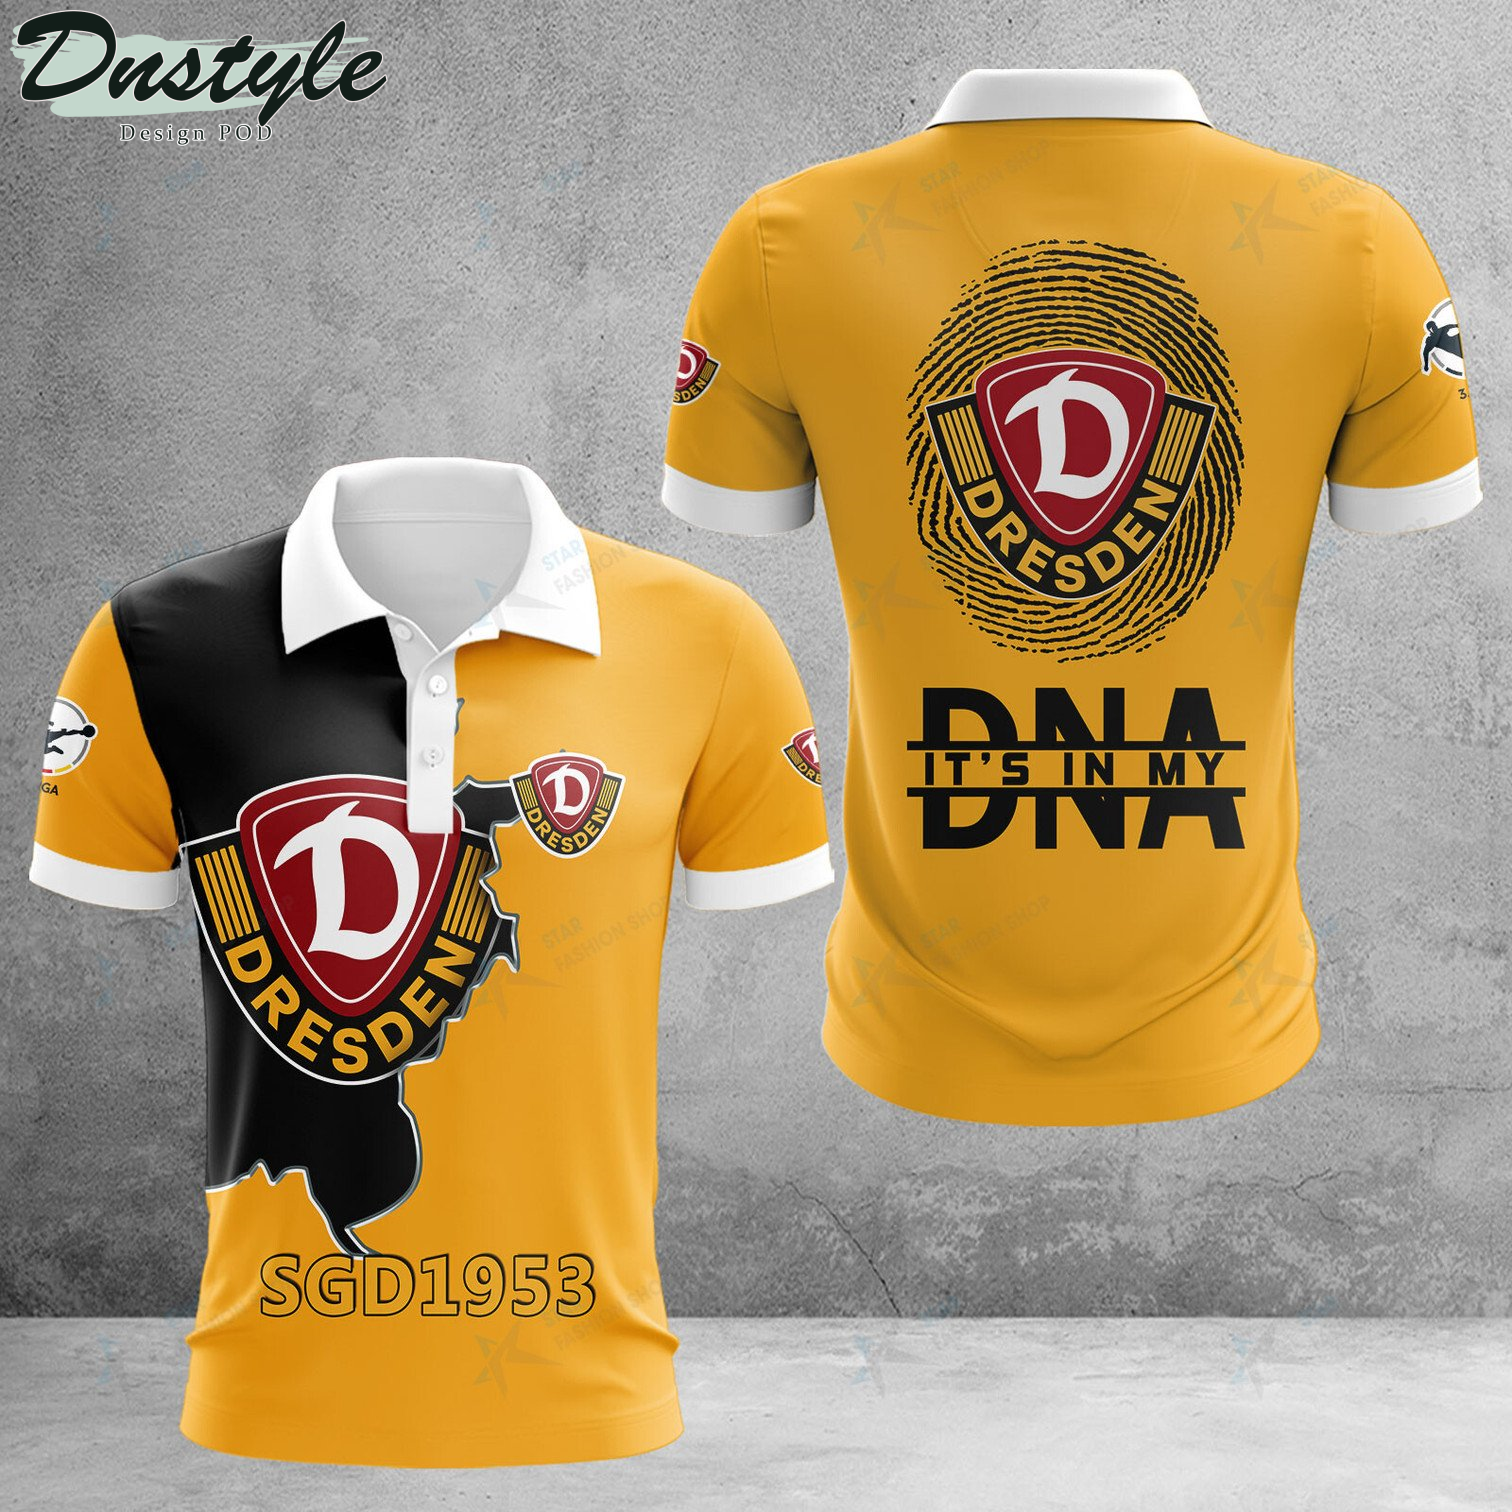 Dynamo Dresden it's in my DNA polo shirt